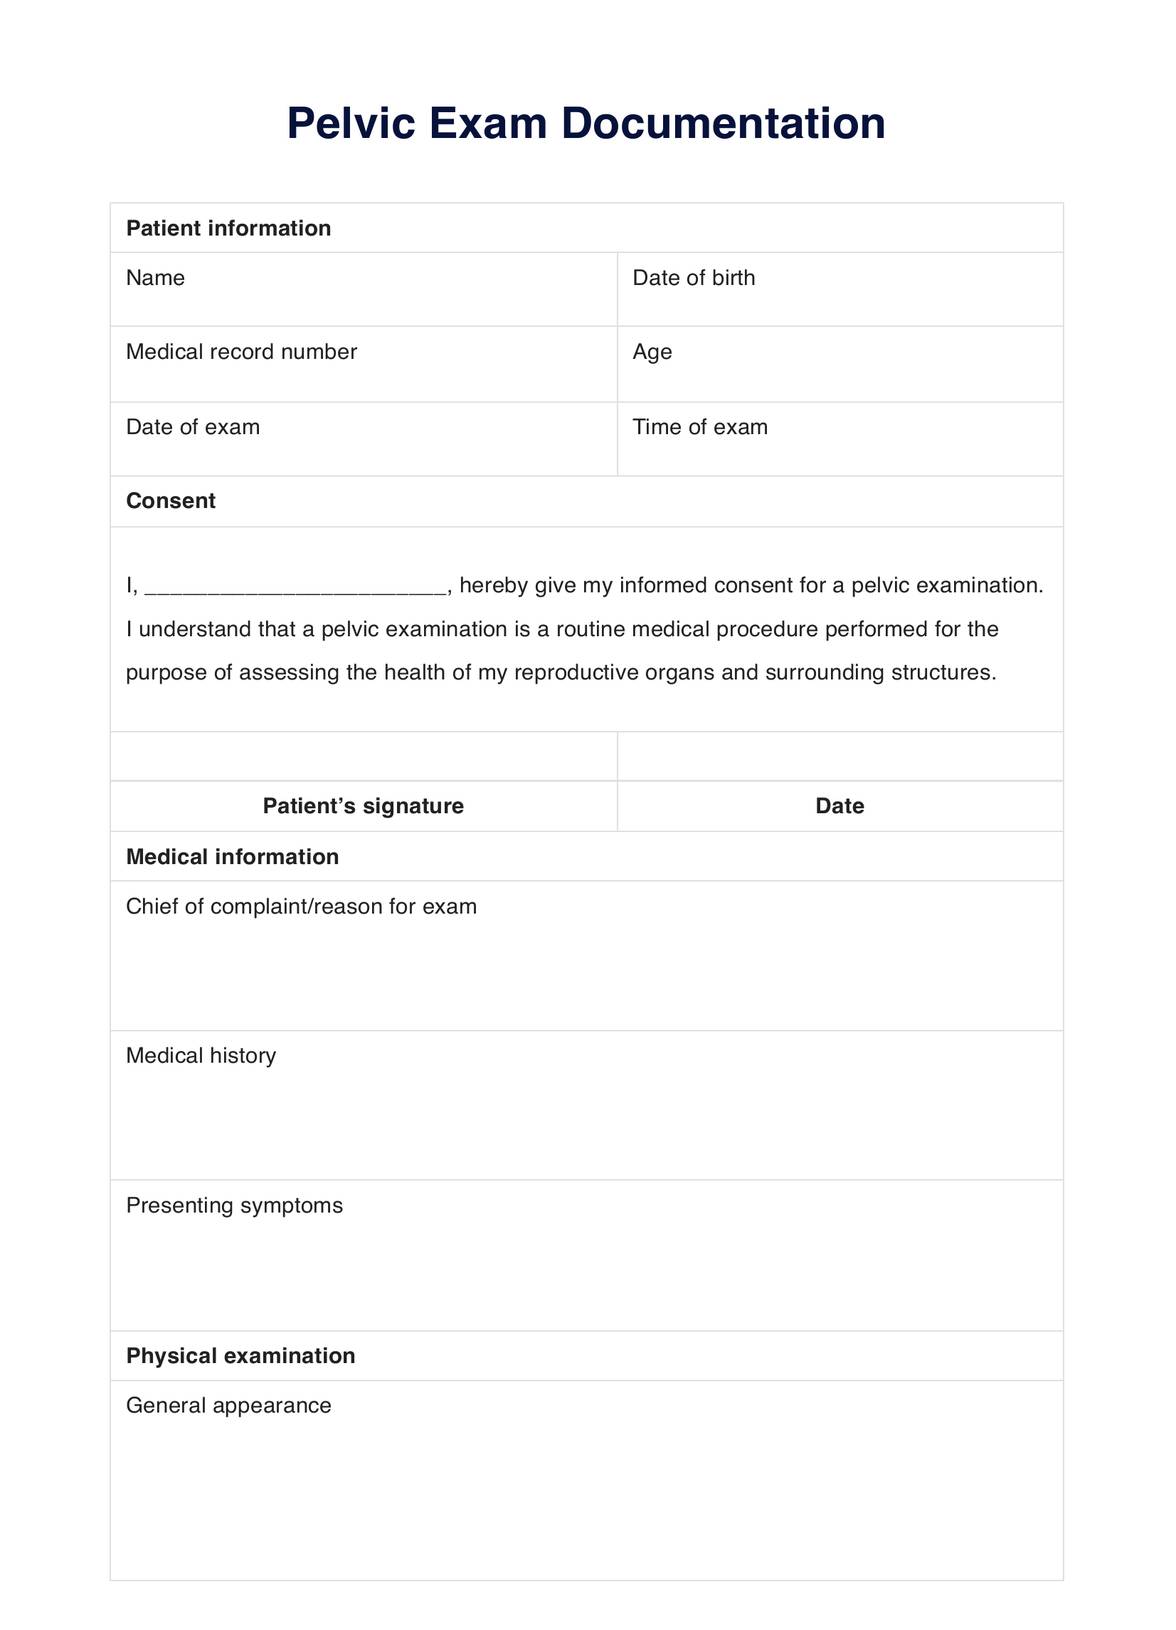 Pelvic Exam Documentation Template PDF Example